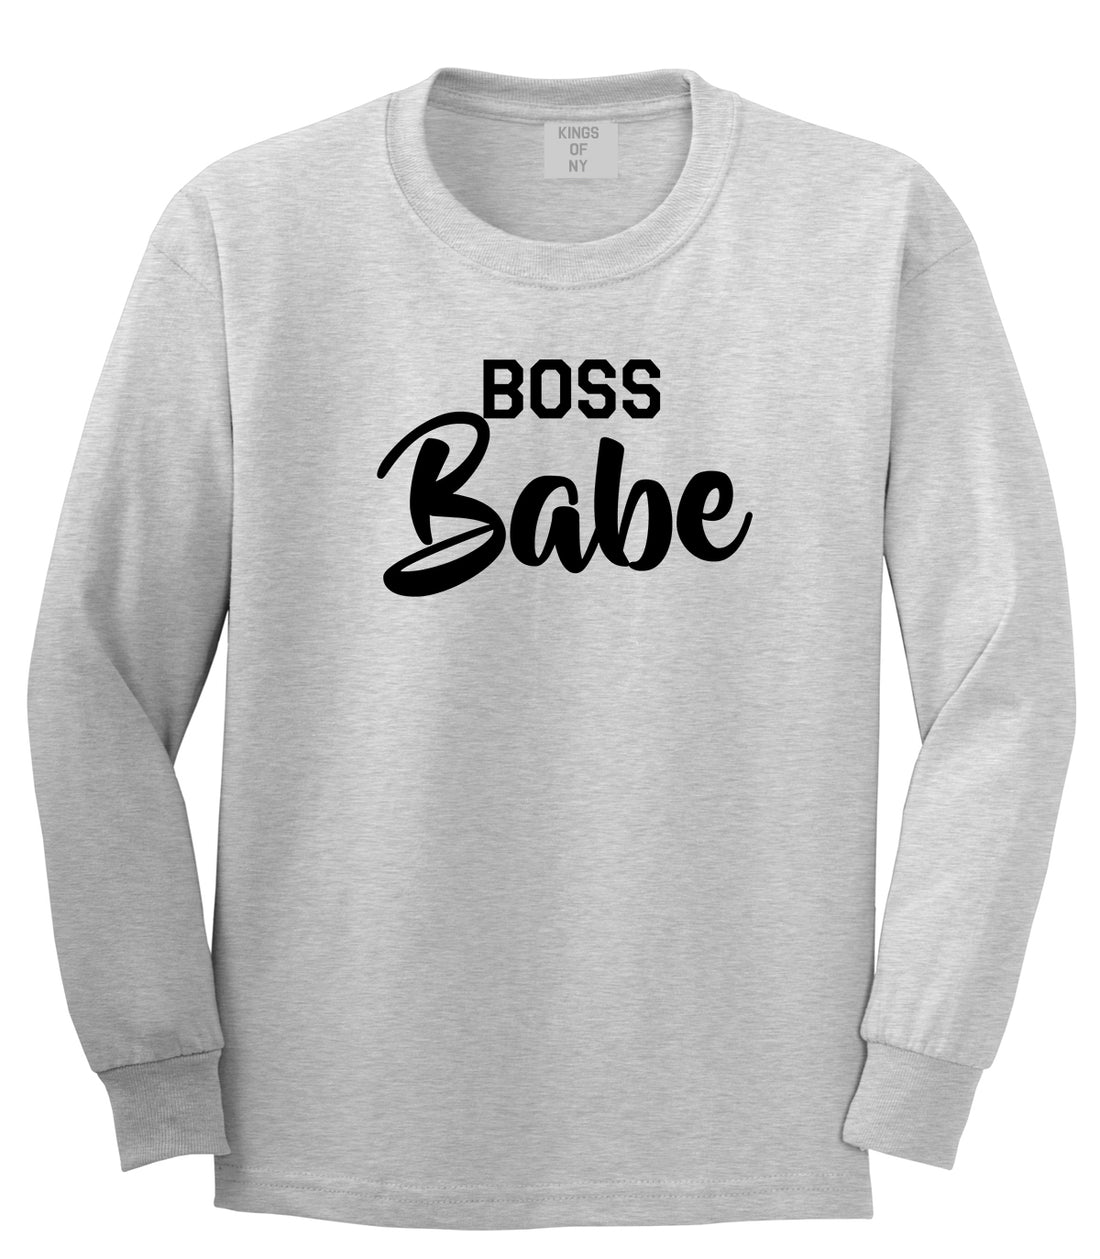 Boss Babe Mens Grey Long Sleeve T-Shirt by KINGS OF NY